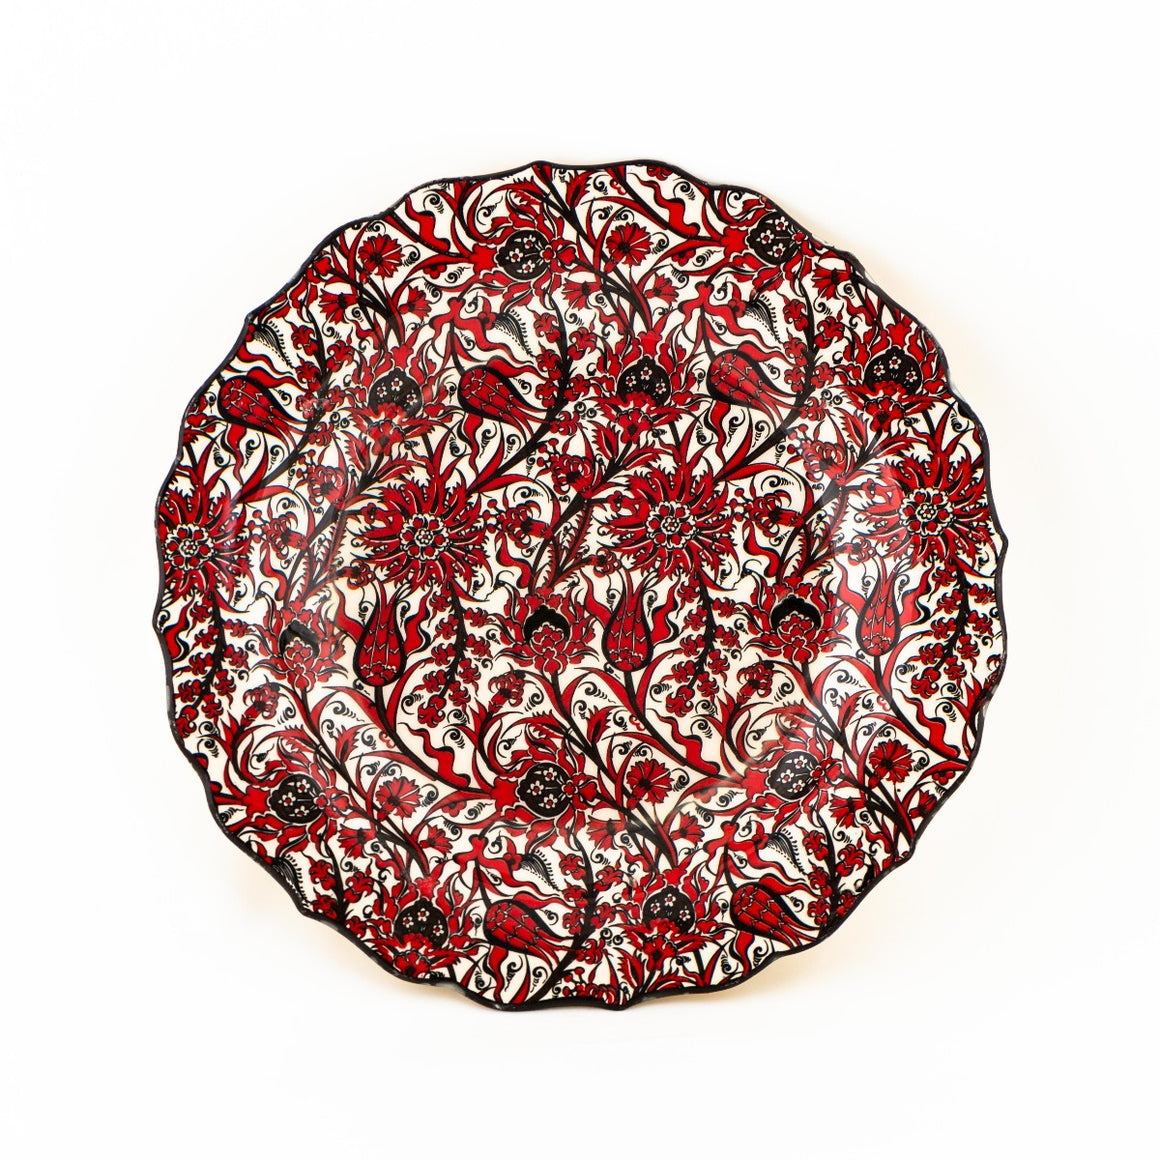 Iznik Plate -Red and Black Floral Pattern